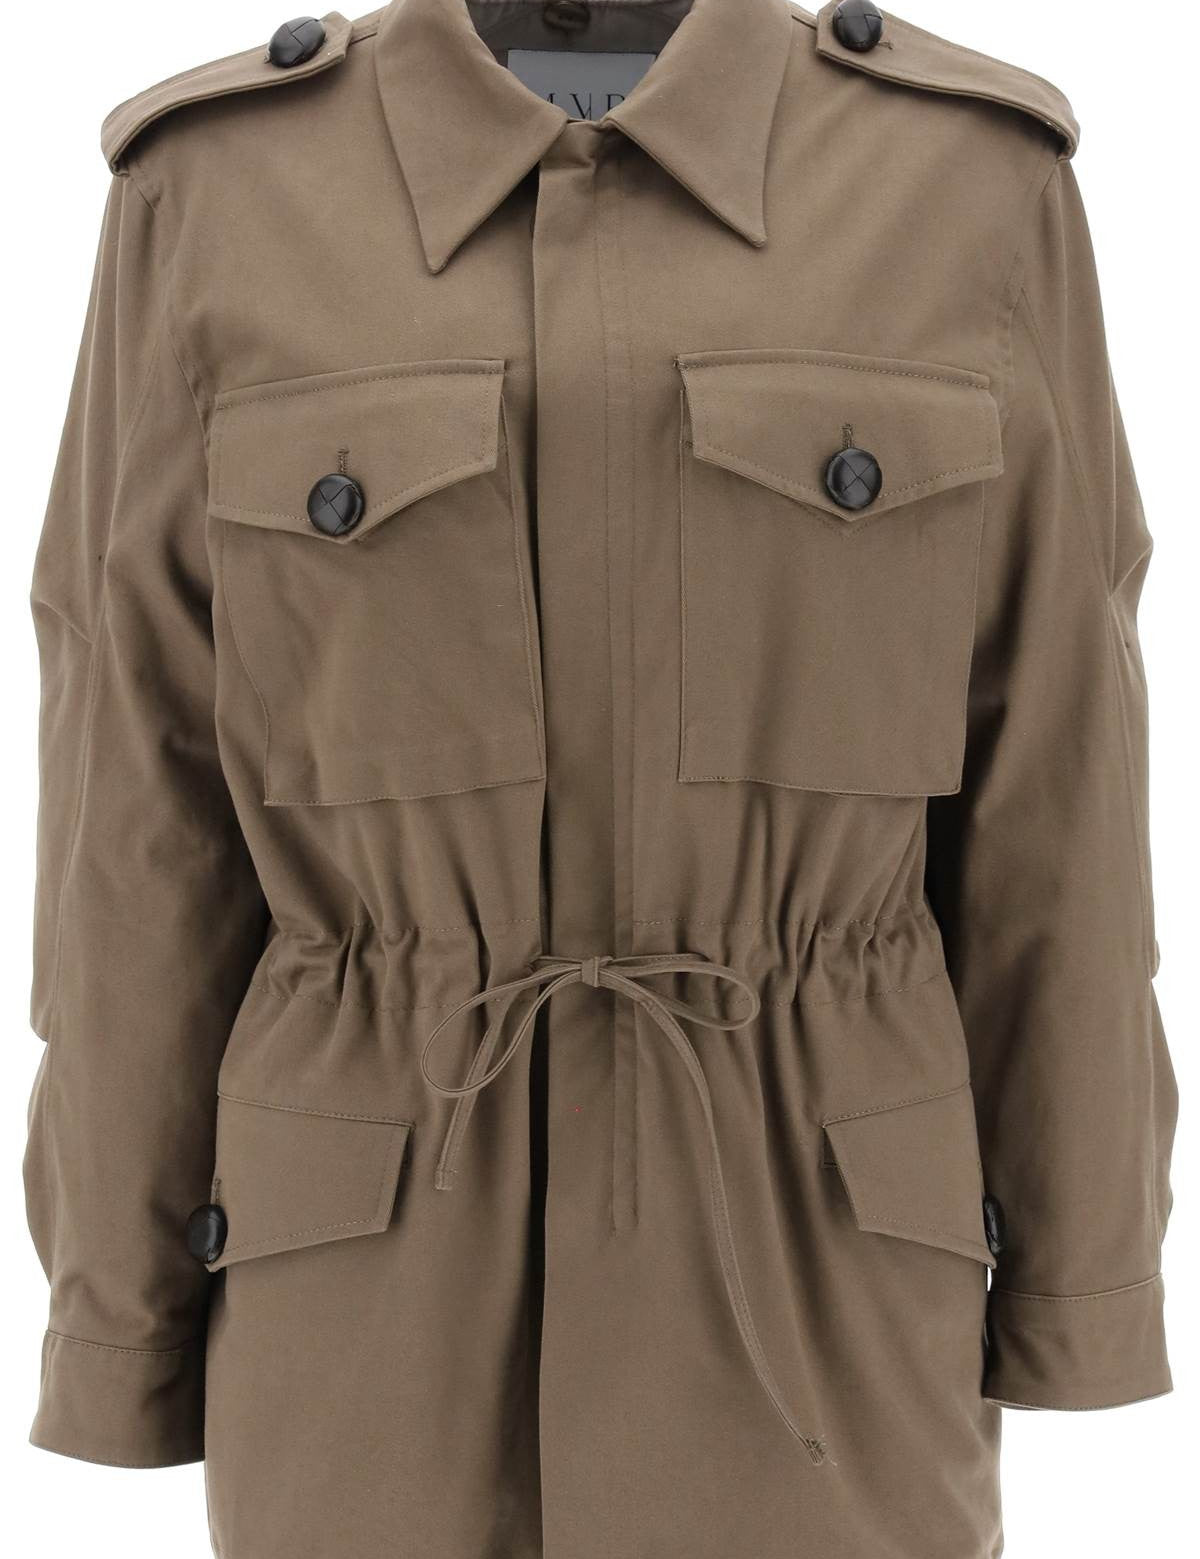 mvp-wardrobe-bigli-cotton-field-jacket.jpg